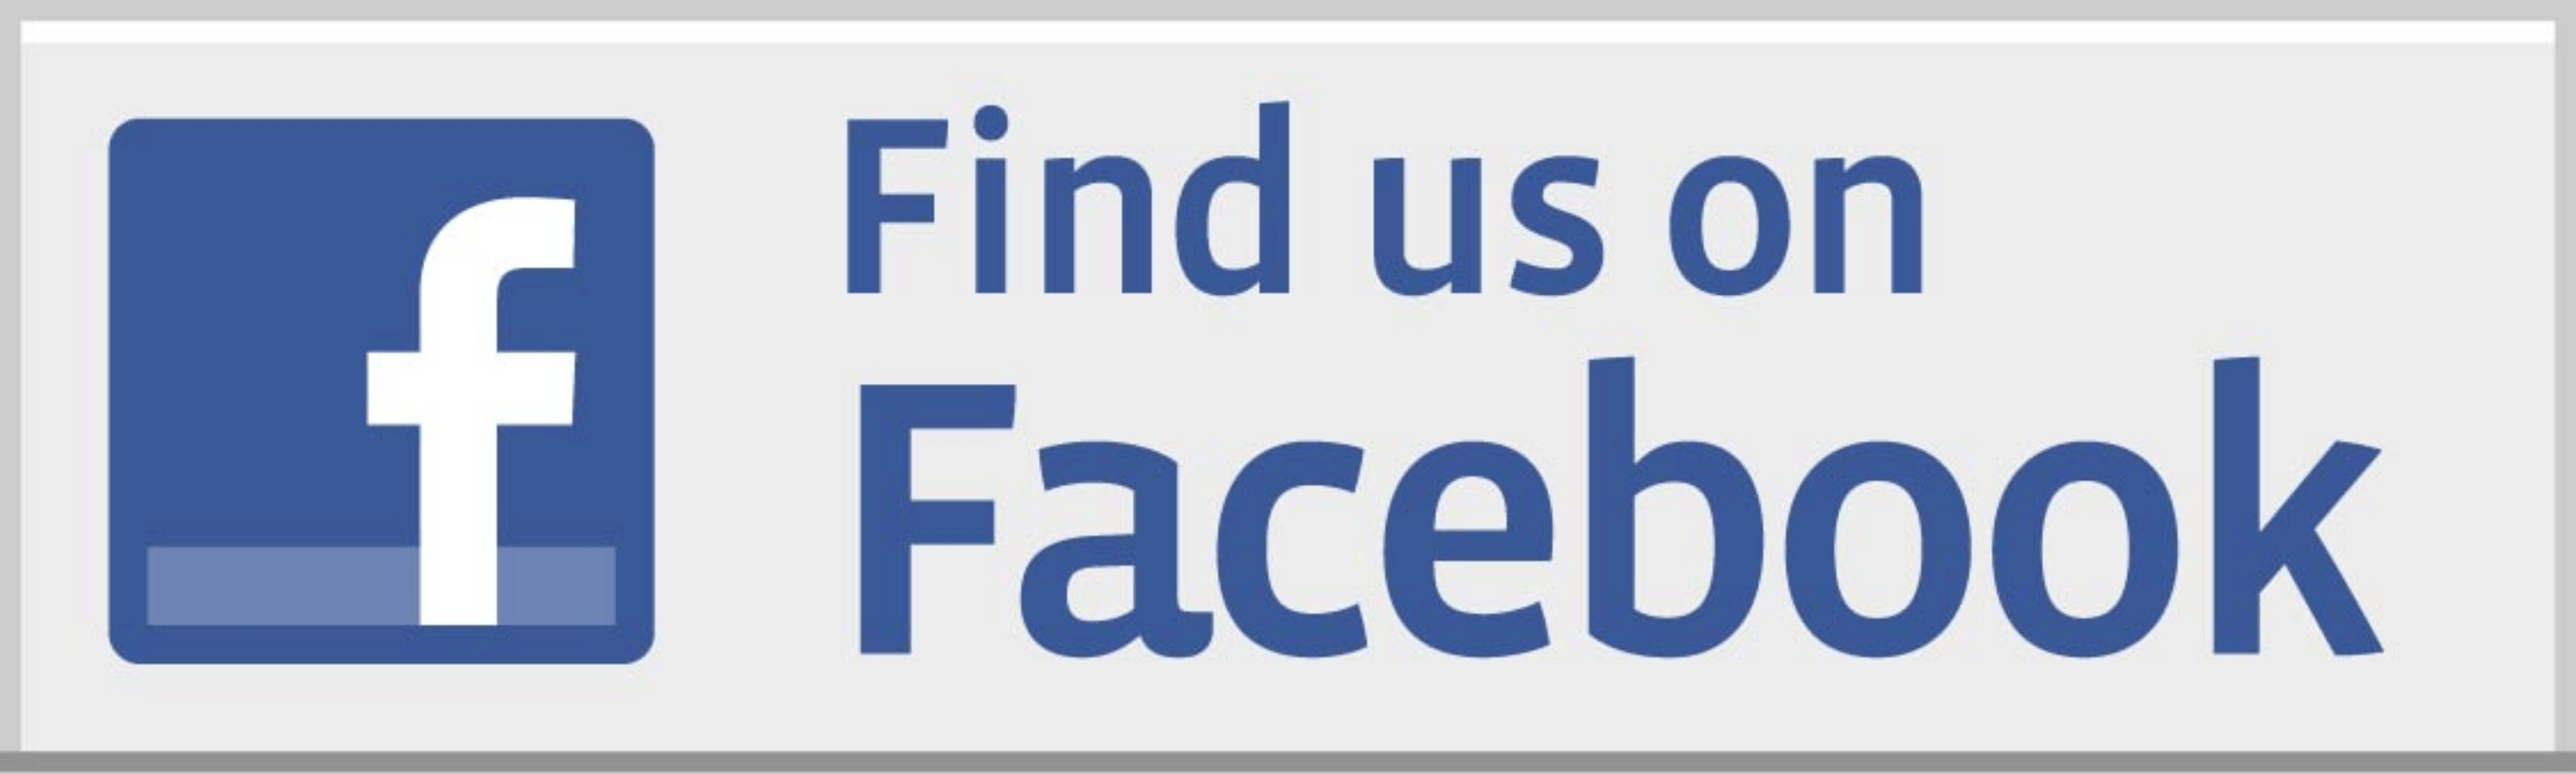 Like Us On Facebook Official Logo - Facebook logo clip art - RR collections